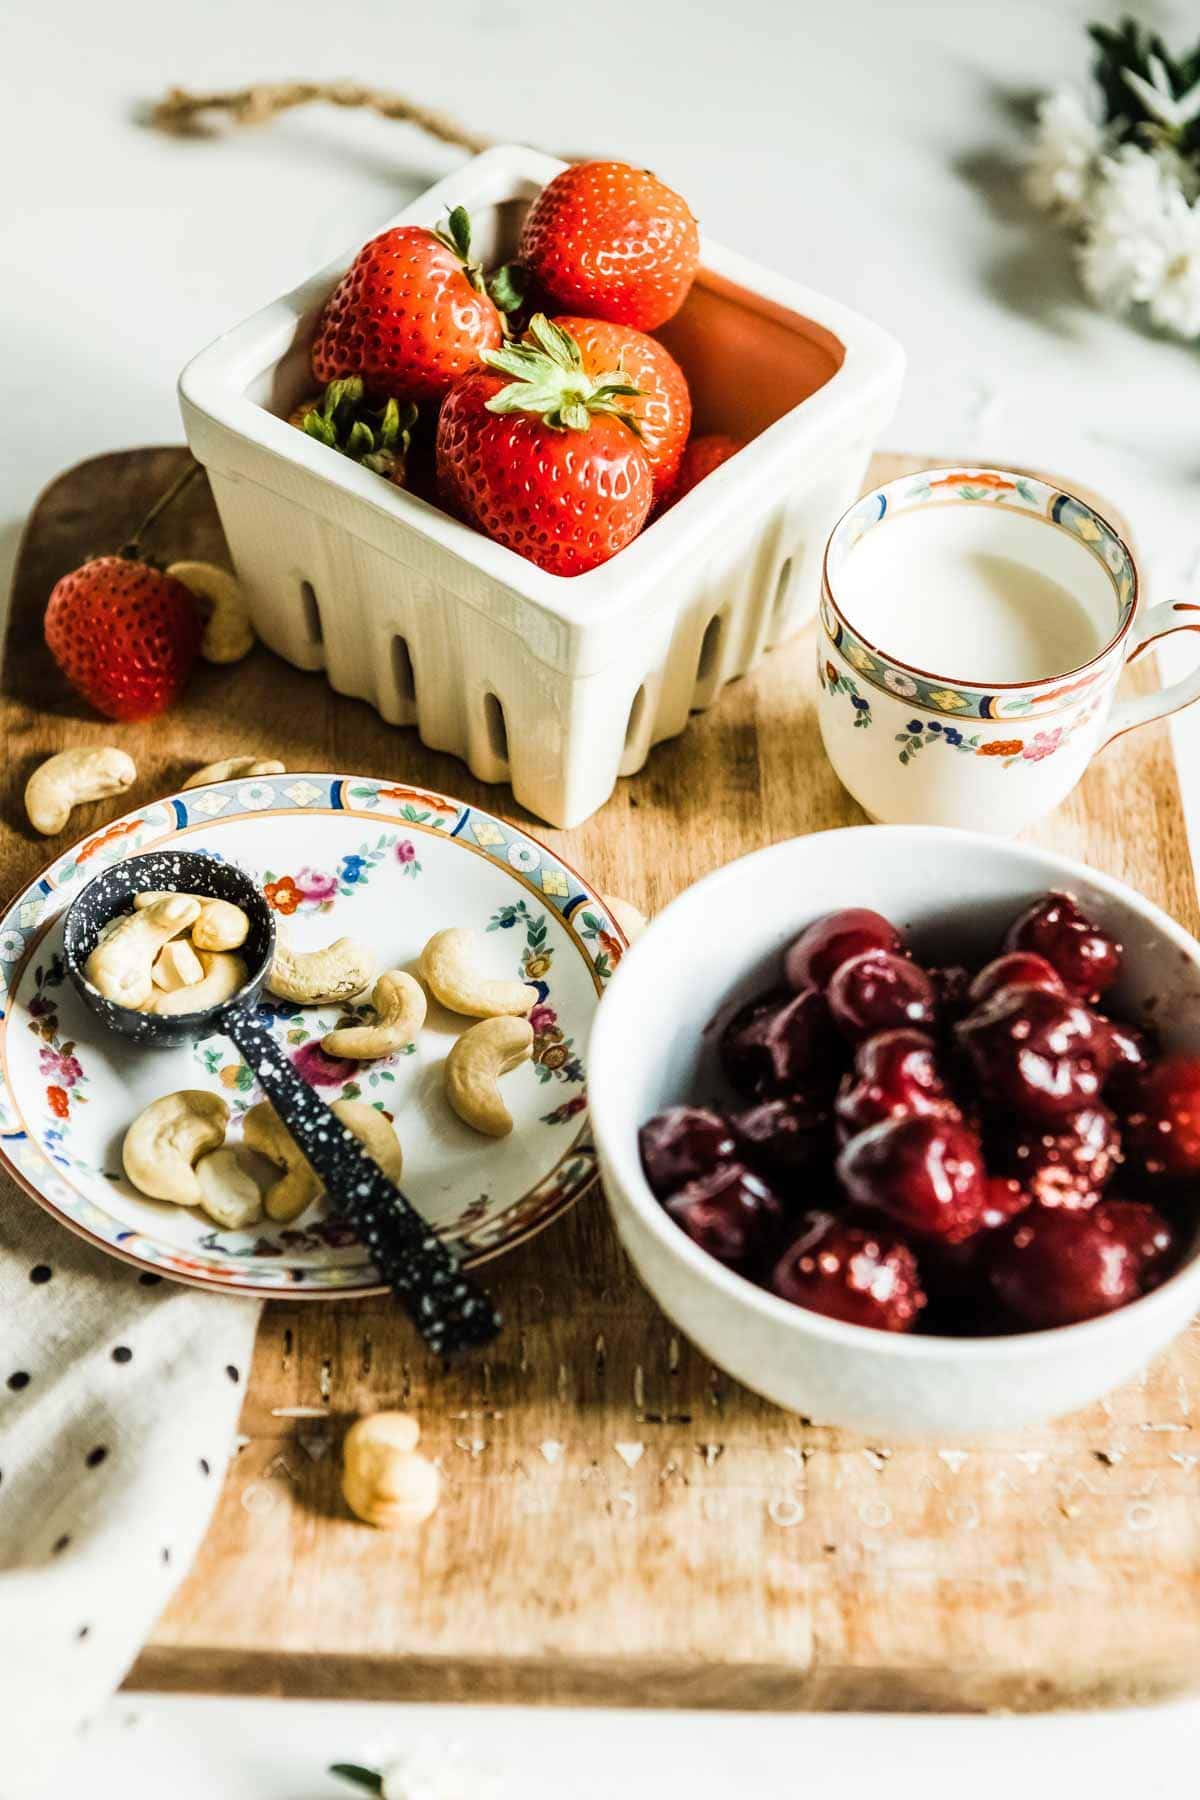 fruit smoothie ingredients including strawberries, cashews, cashew milk and cherries.